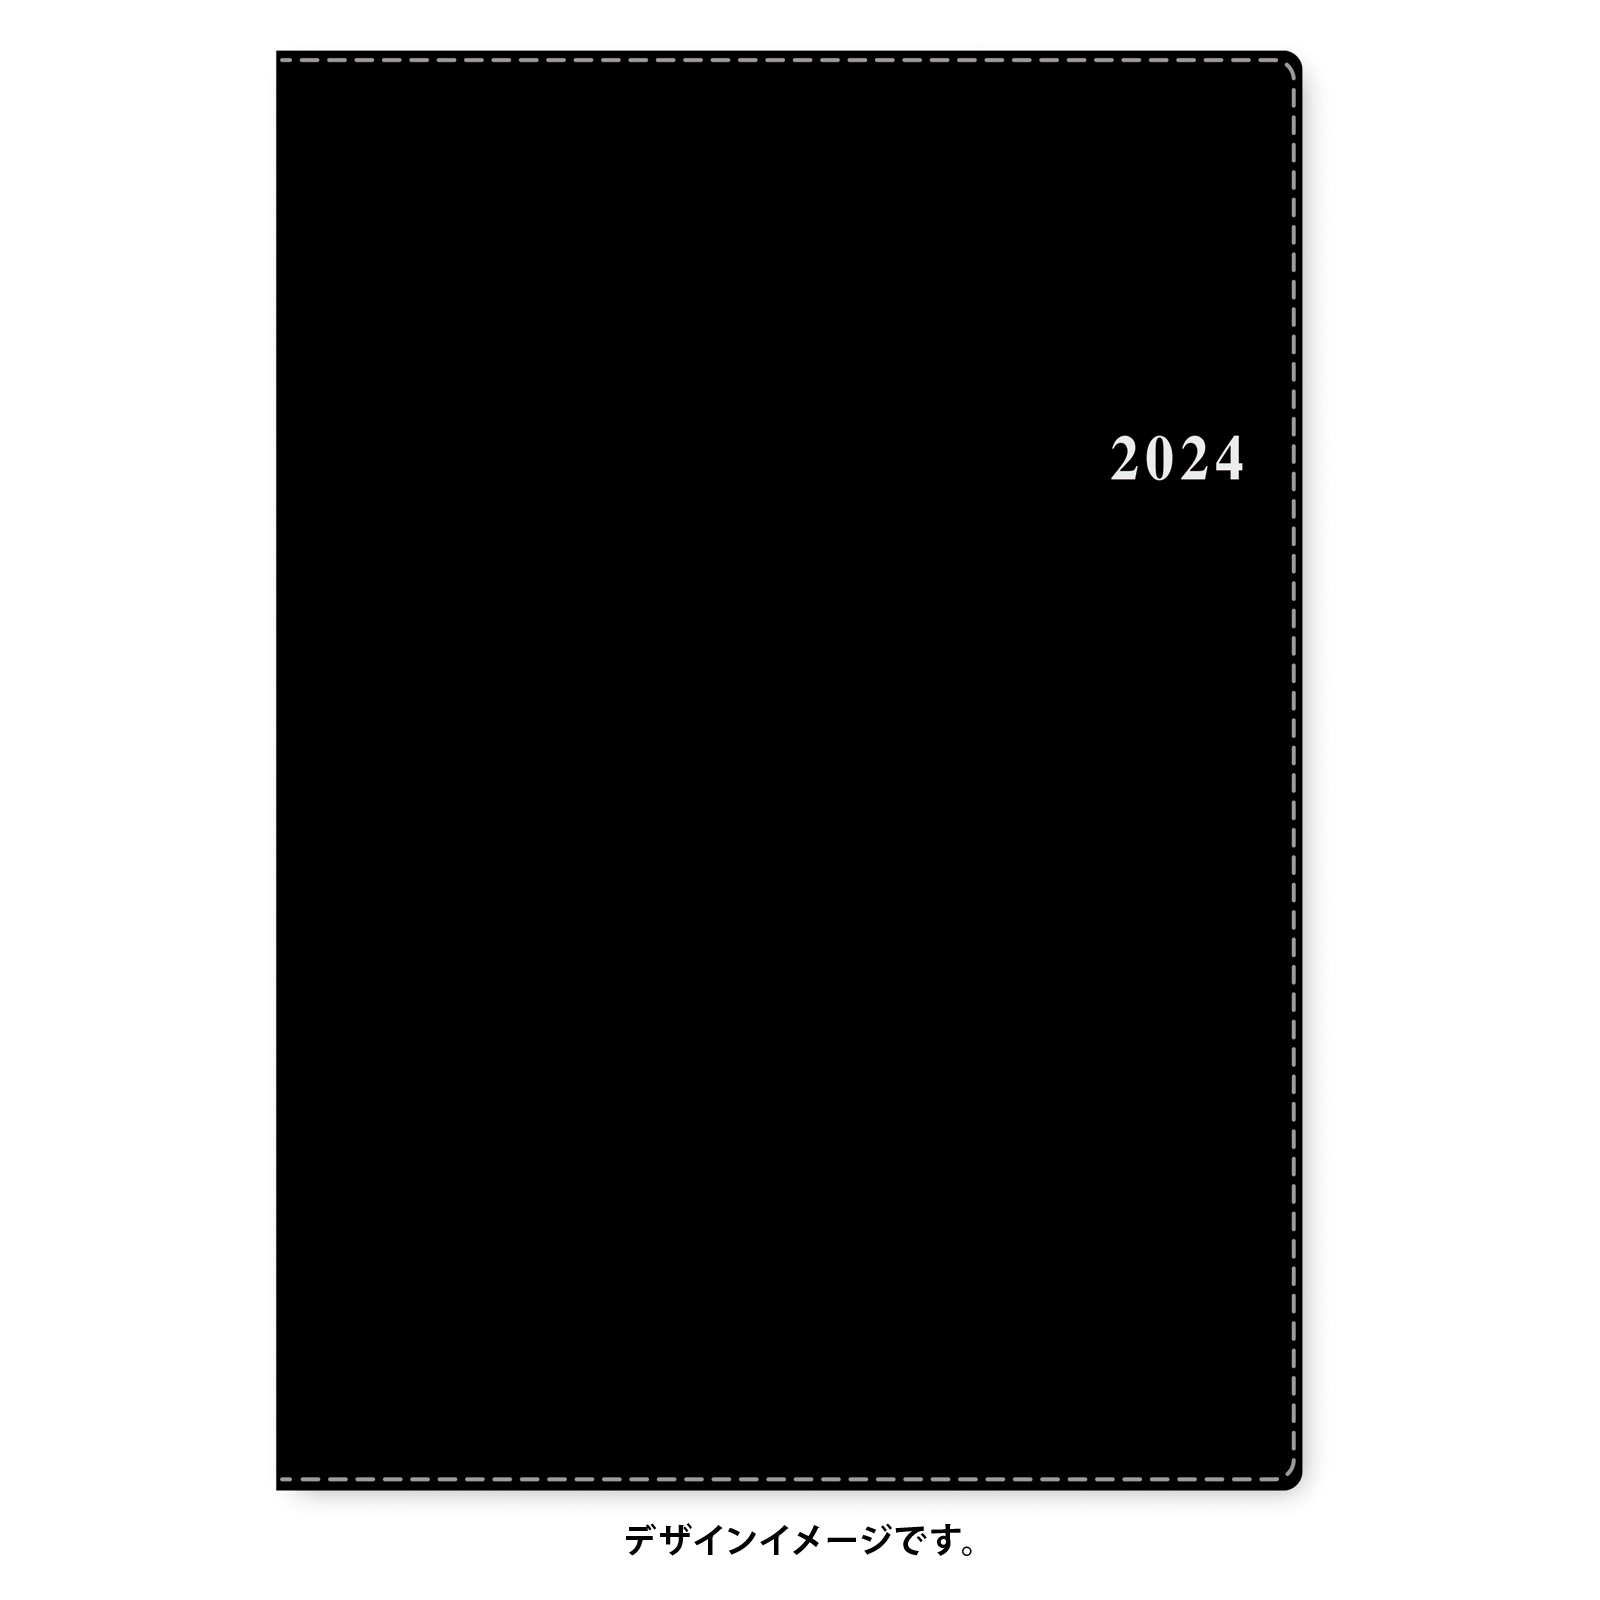 NOLTY NOLTY 2024年版 手帳 ベルノ A5 バーチカル 1（黒）A5 月間ブロック 週間バーチカル 6232 手帳（文具）の商品画像